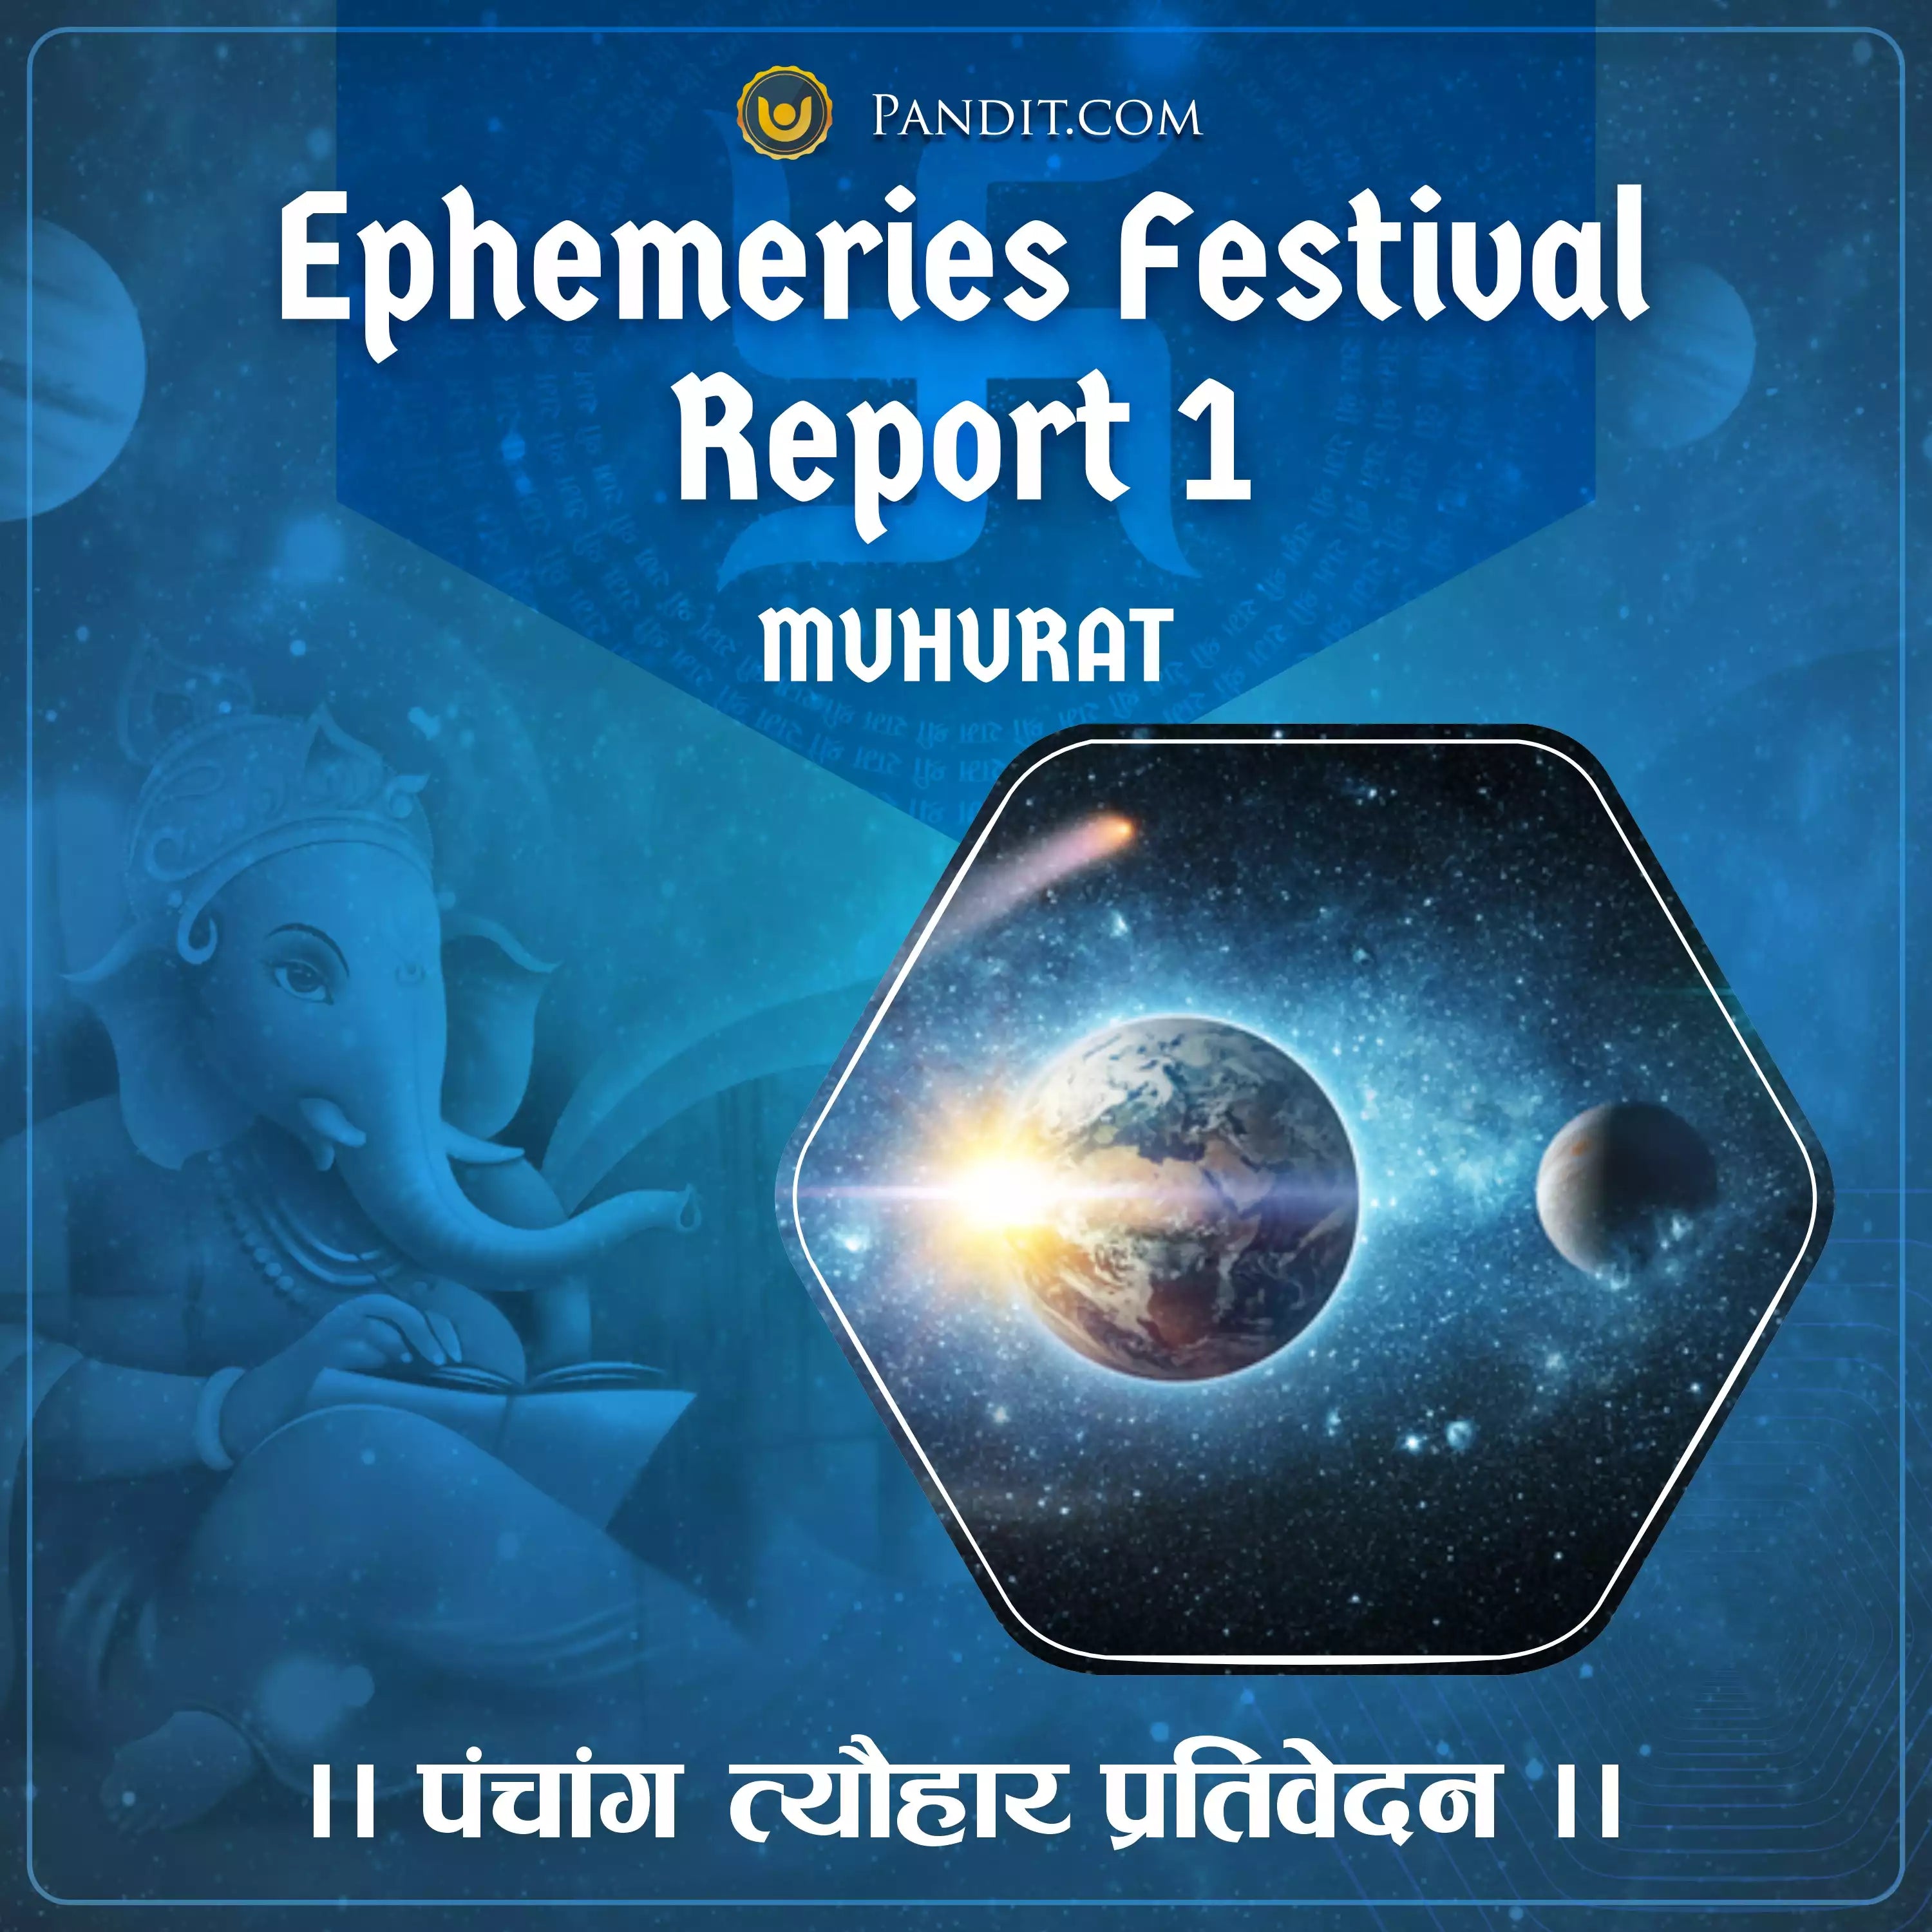 Ephemeries Festival Report 1